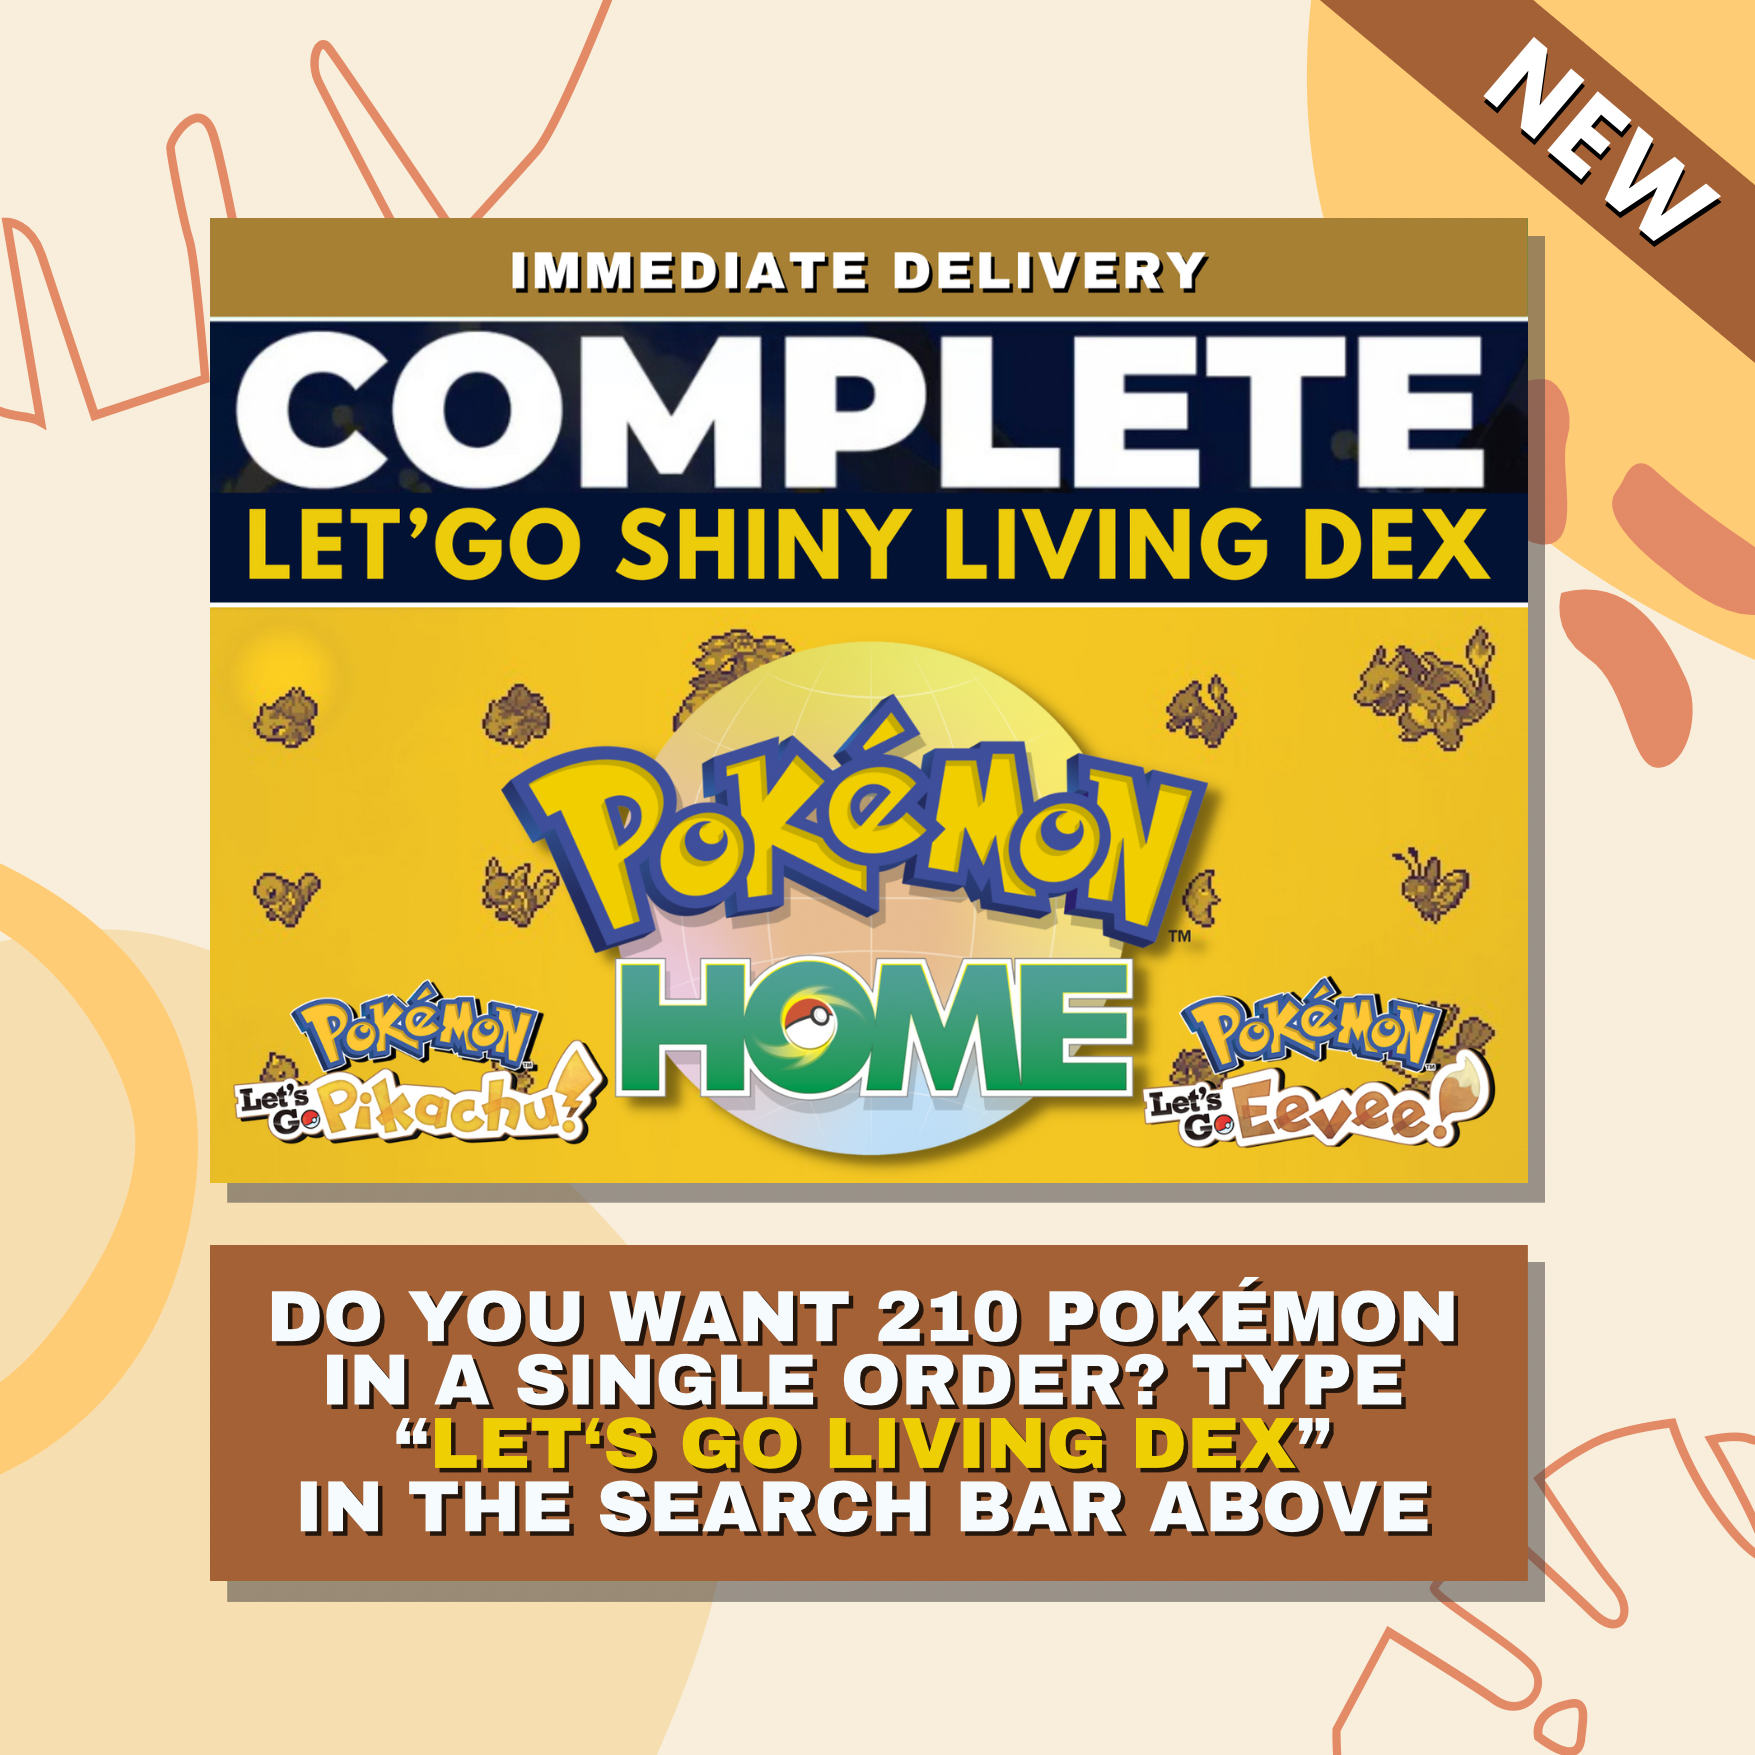 Dugtrio Kanto Shiny ✨ or Non Shiny Pokémon Let's Go Pikachu Eevee Level 100 Competitive Battle Ready 6 IV 100% Legit Legal Customizable Custom OT by Shiny Living Dex | Shiny Living Dex